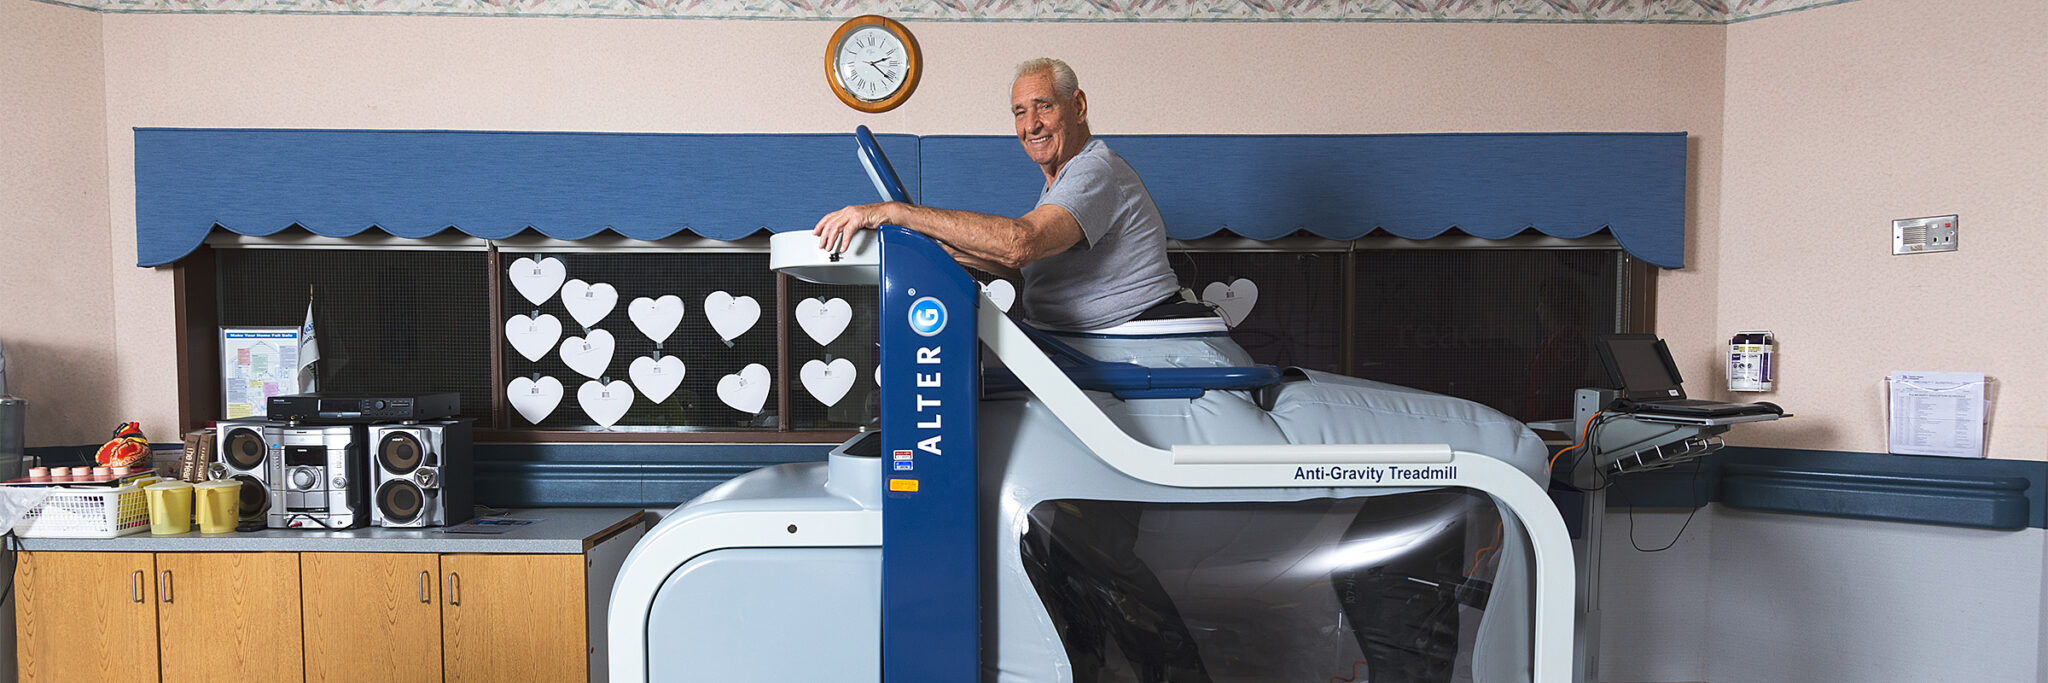 Patient participating in cardiopulmonary rehabilitation exercise on anti-gravity treadmill